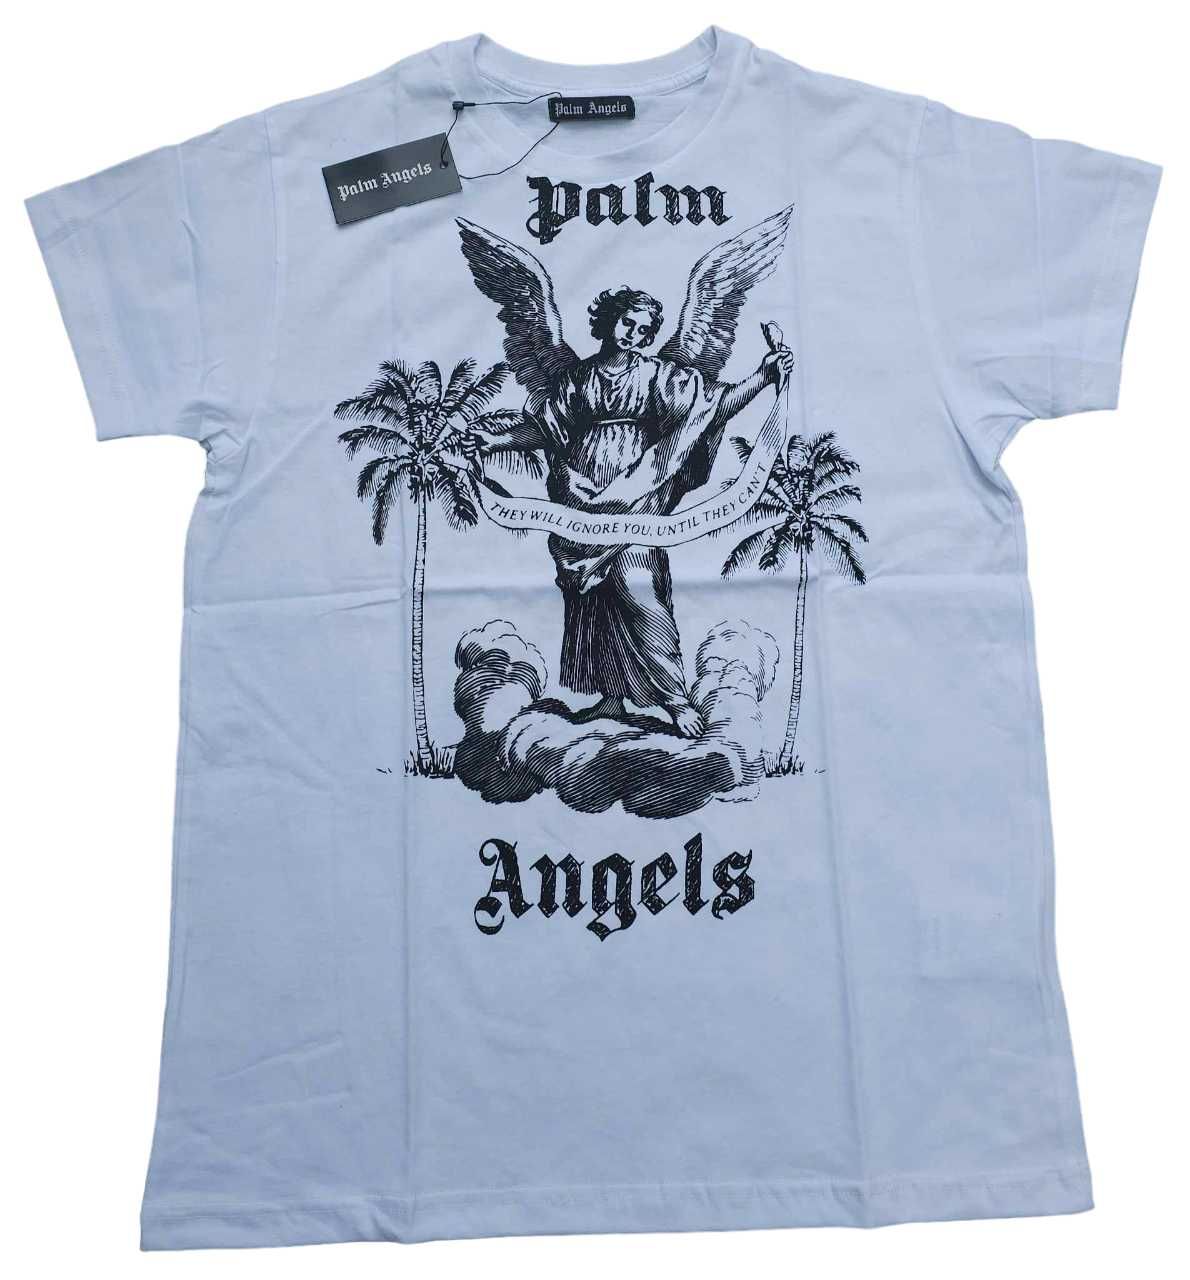 Palm Angels t-shirt preta novo modelo